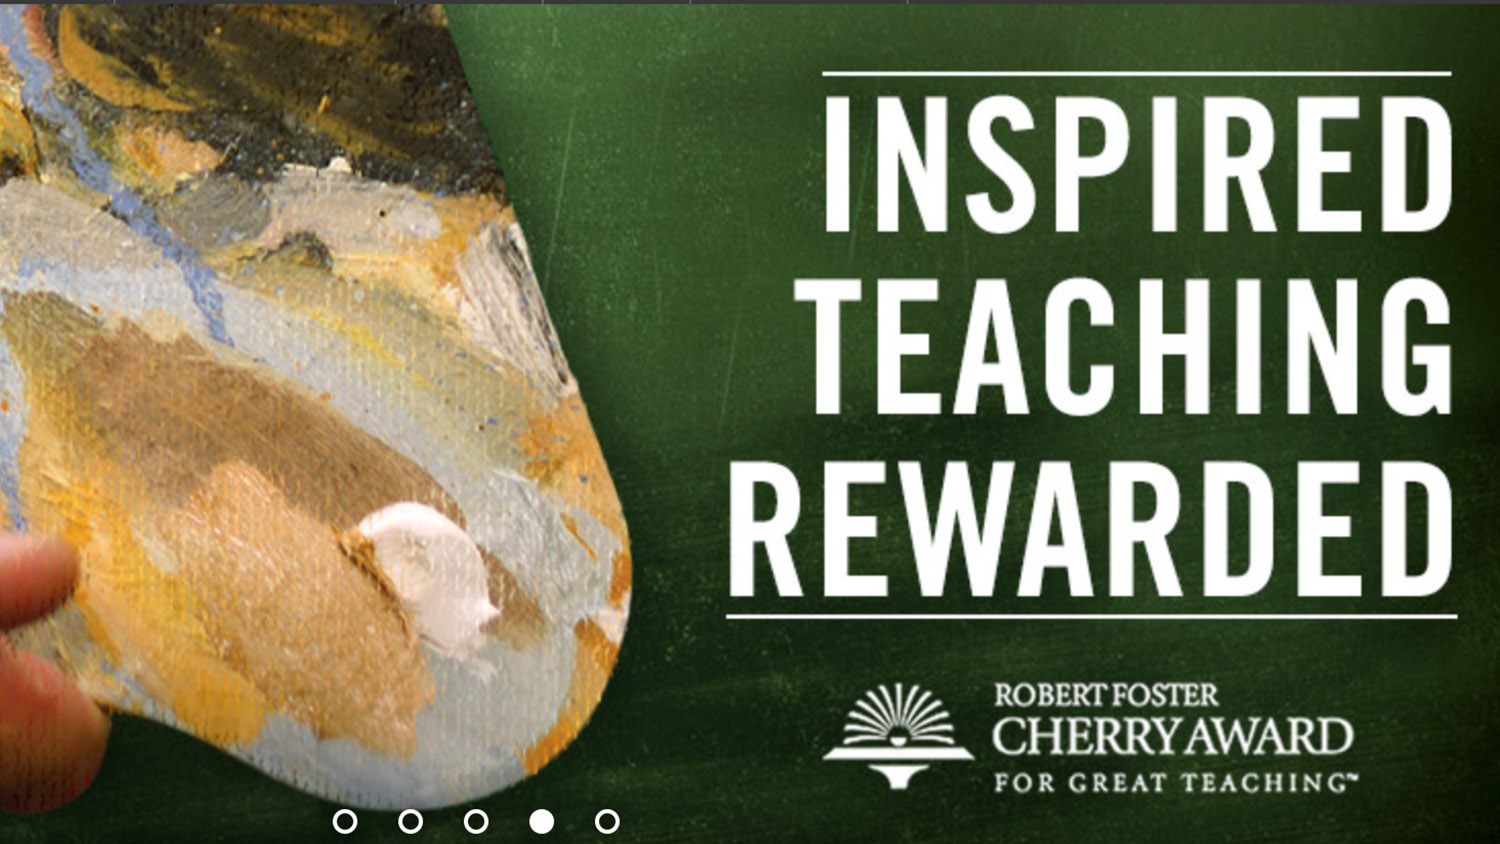 Cherry Award for Great Teaching